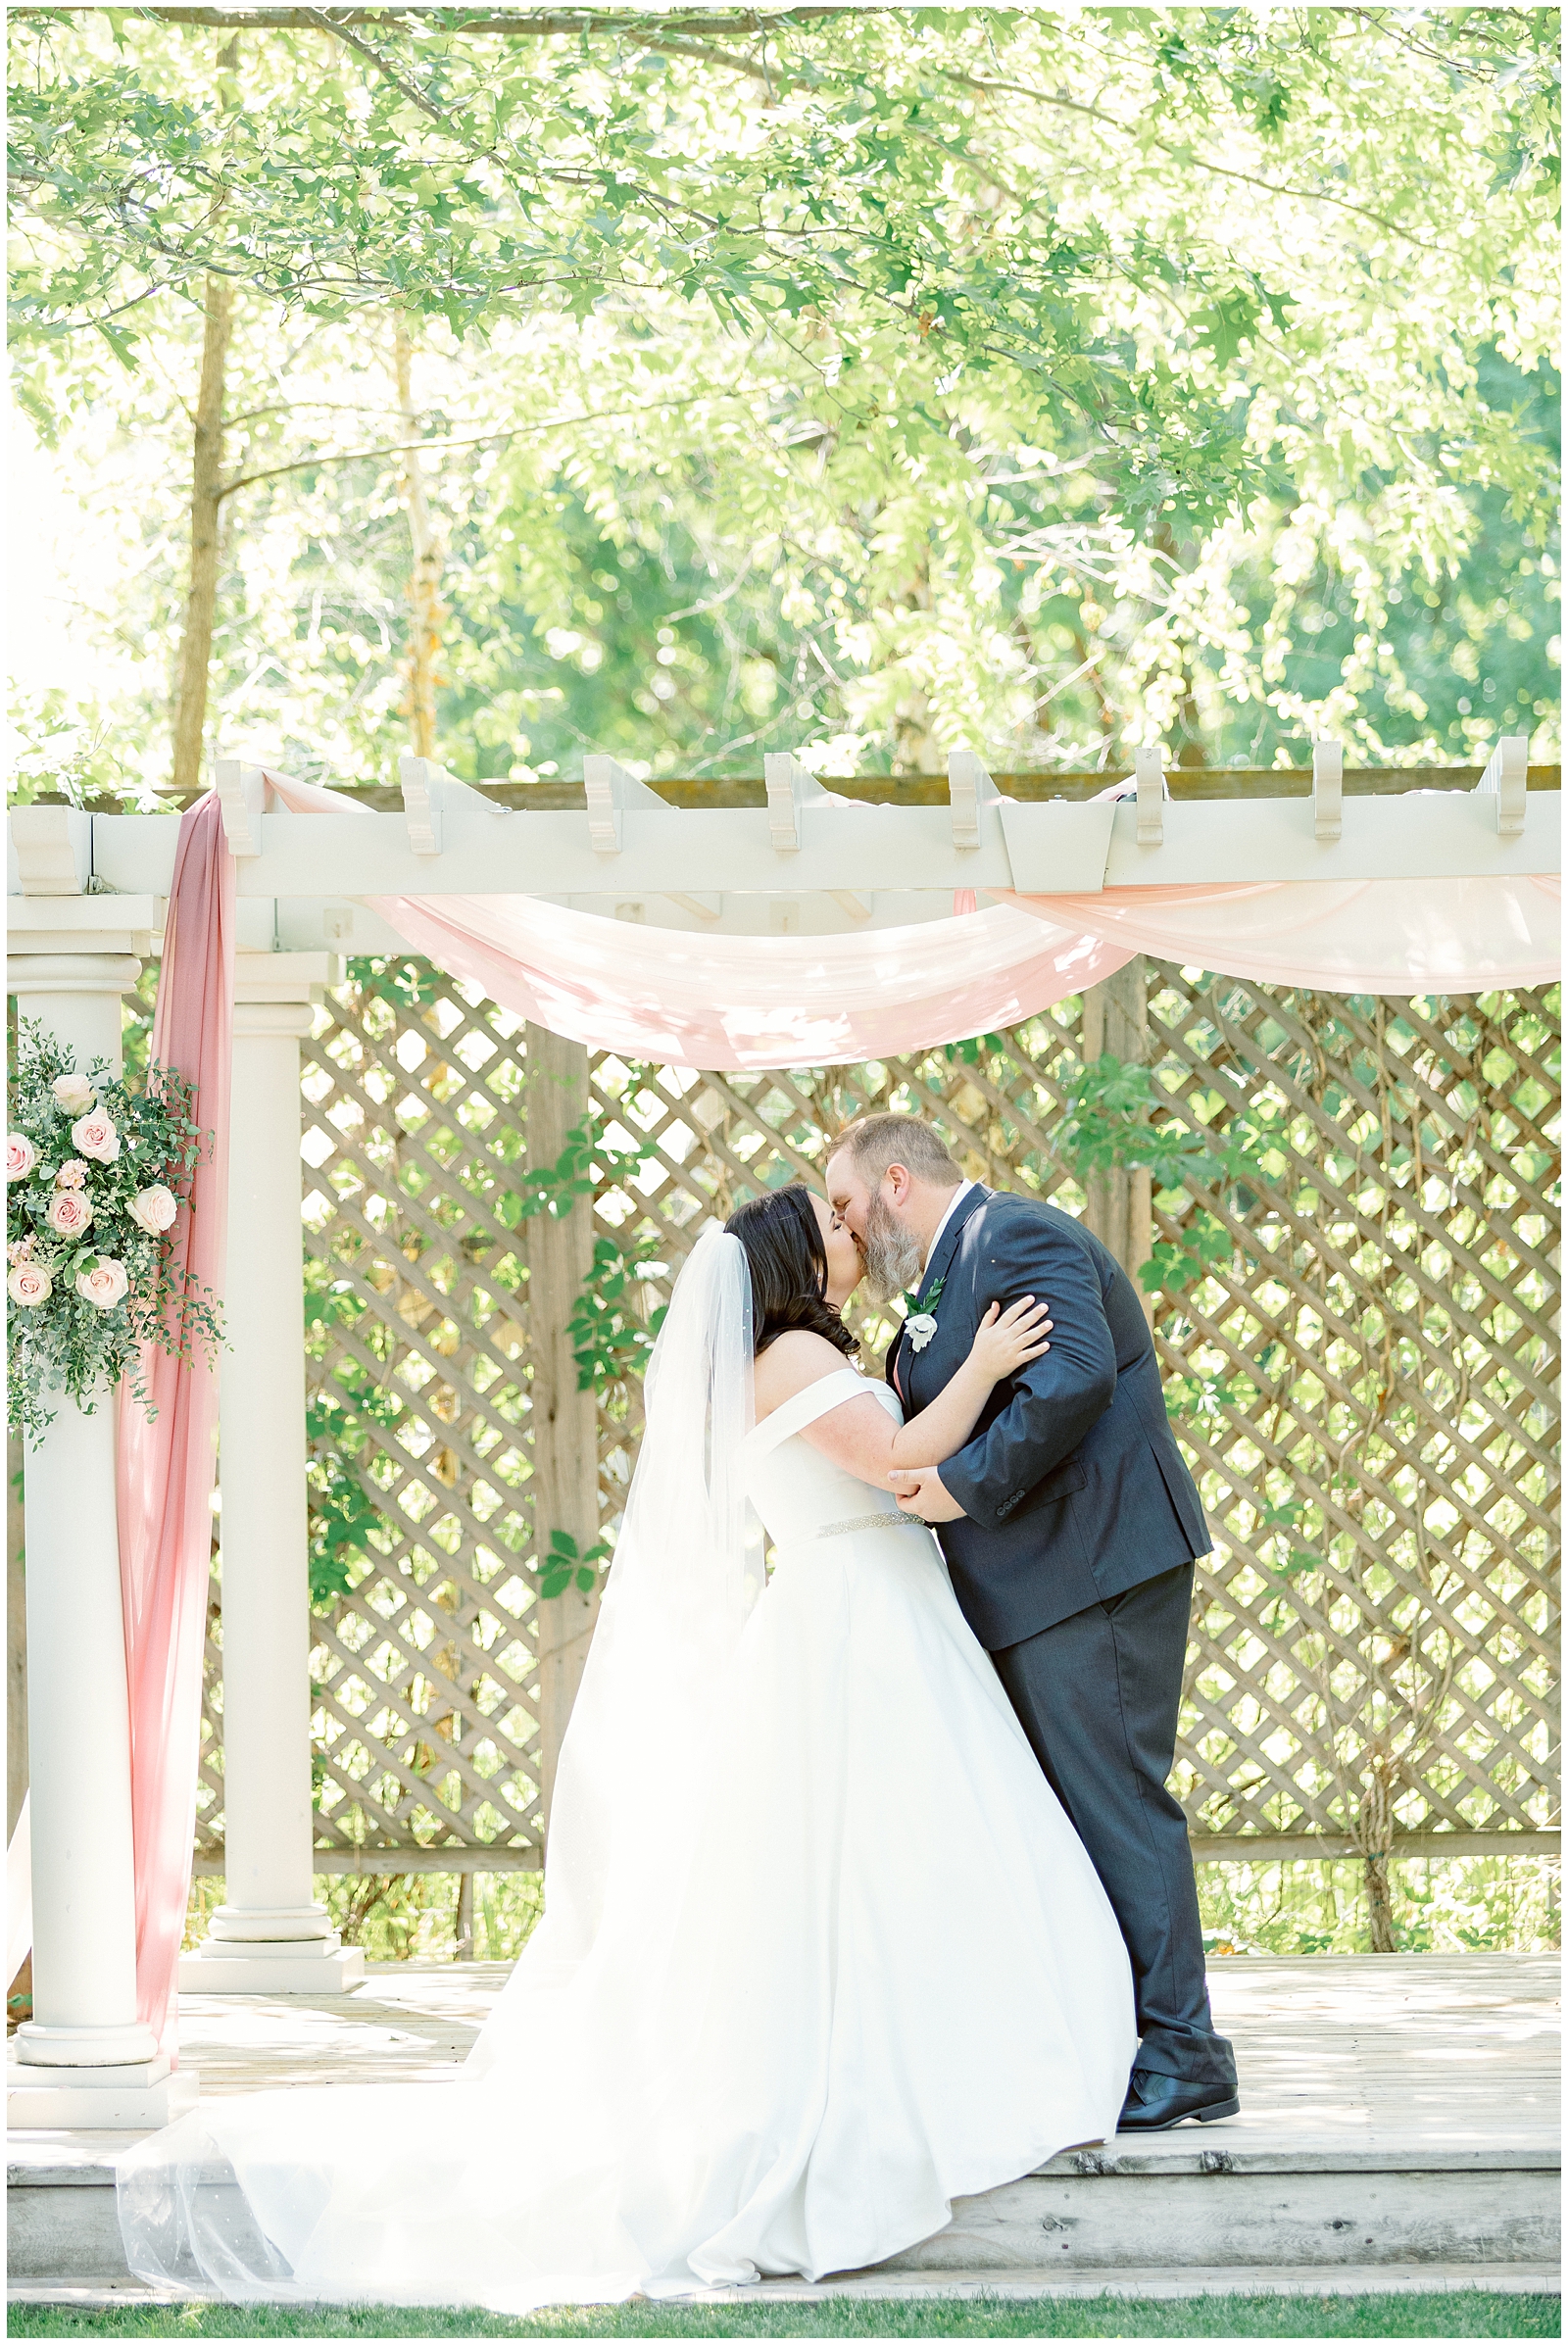 The wedding ceremony kiss